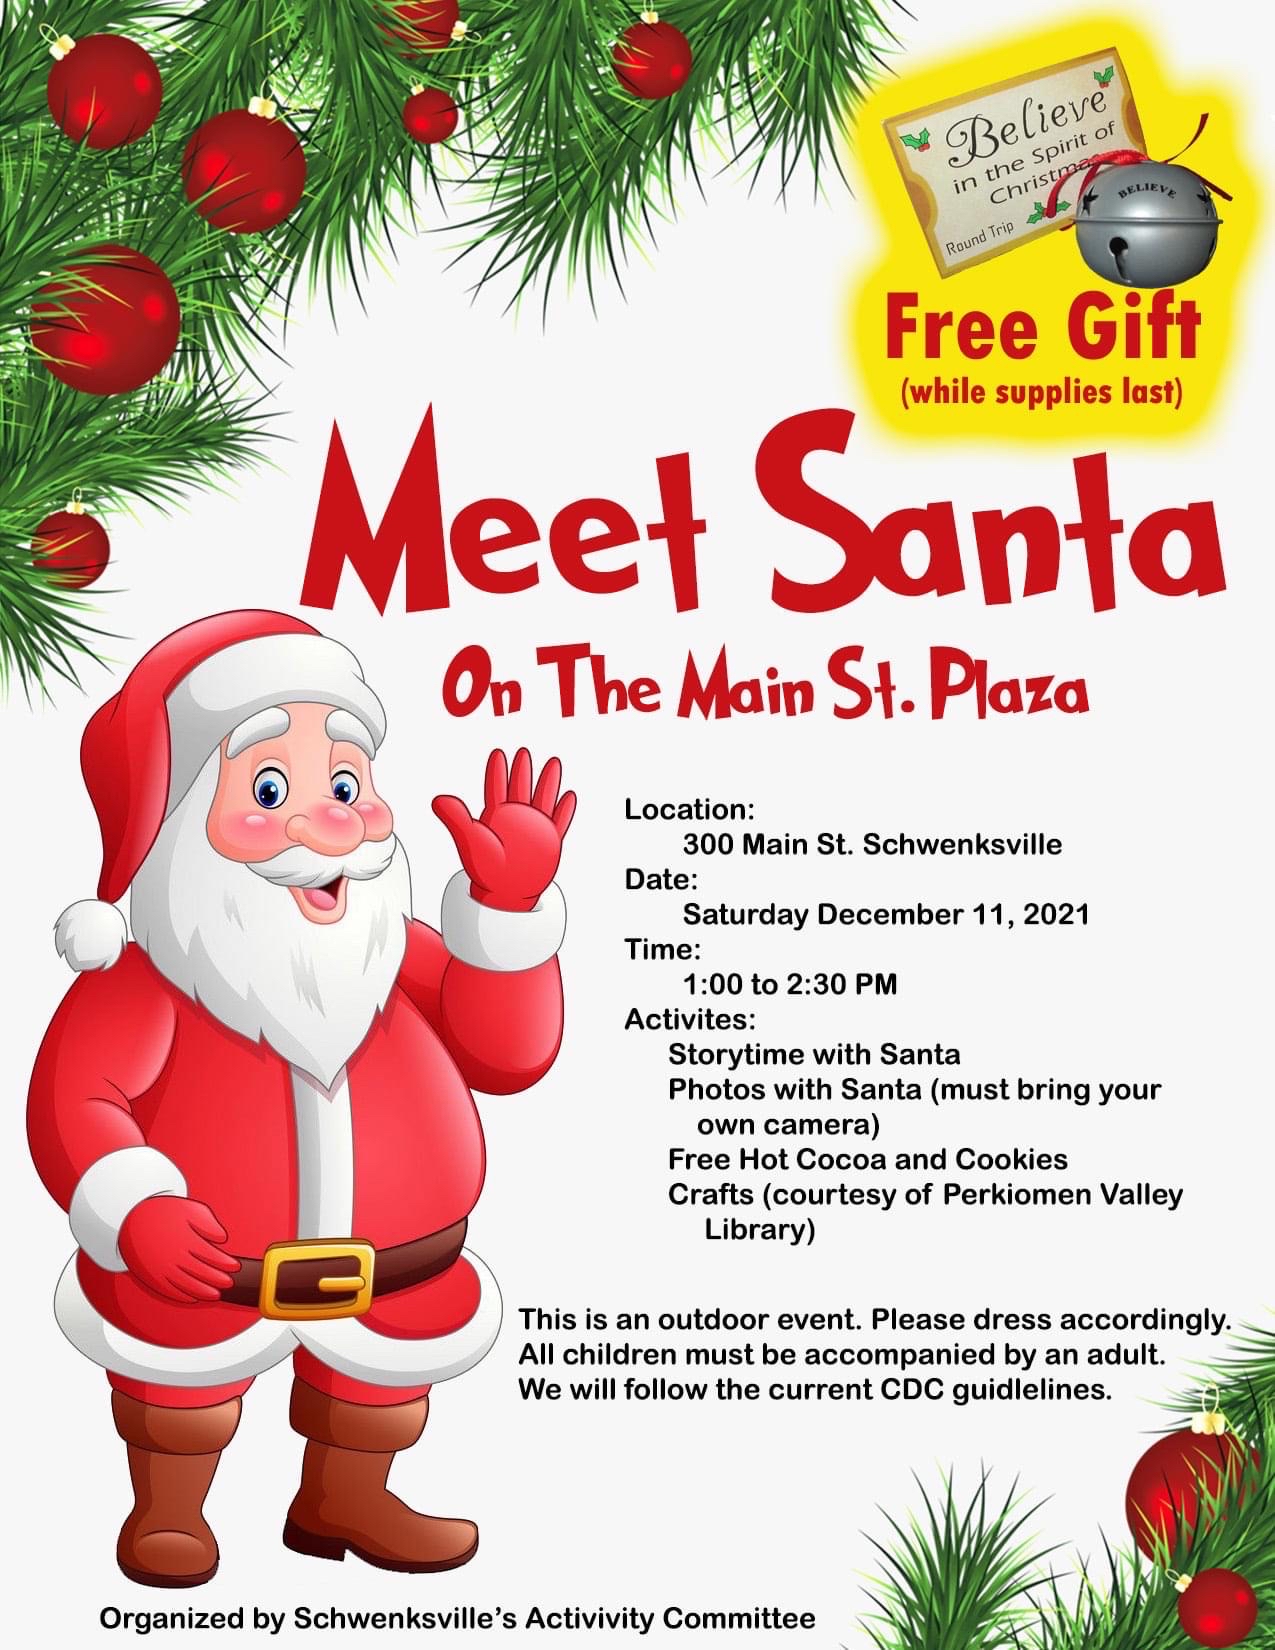 Ad for Meet Santa Event on Main Street P laza